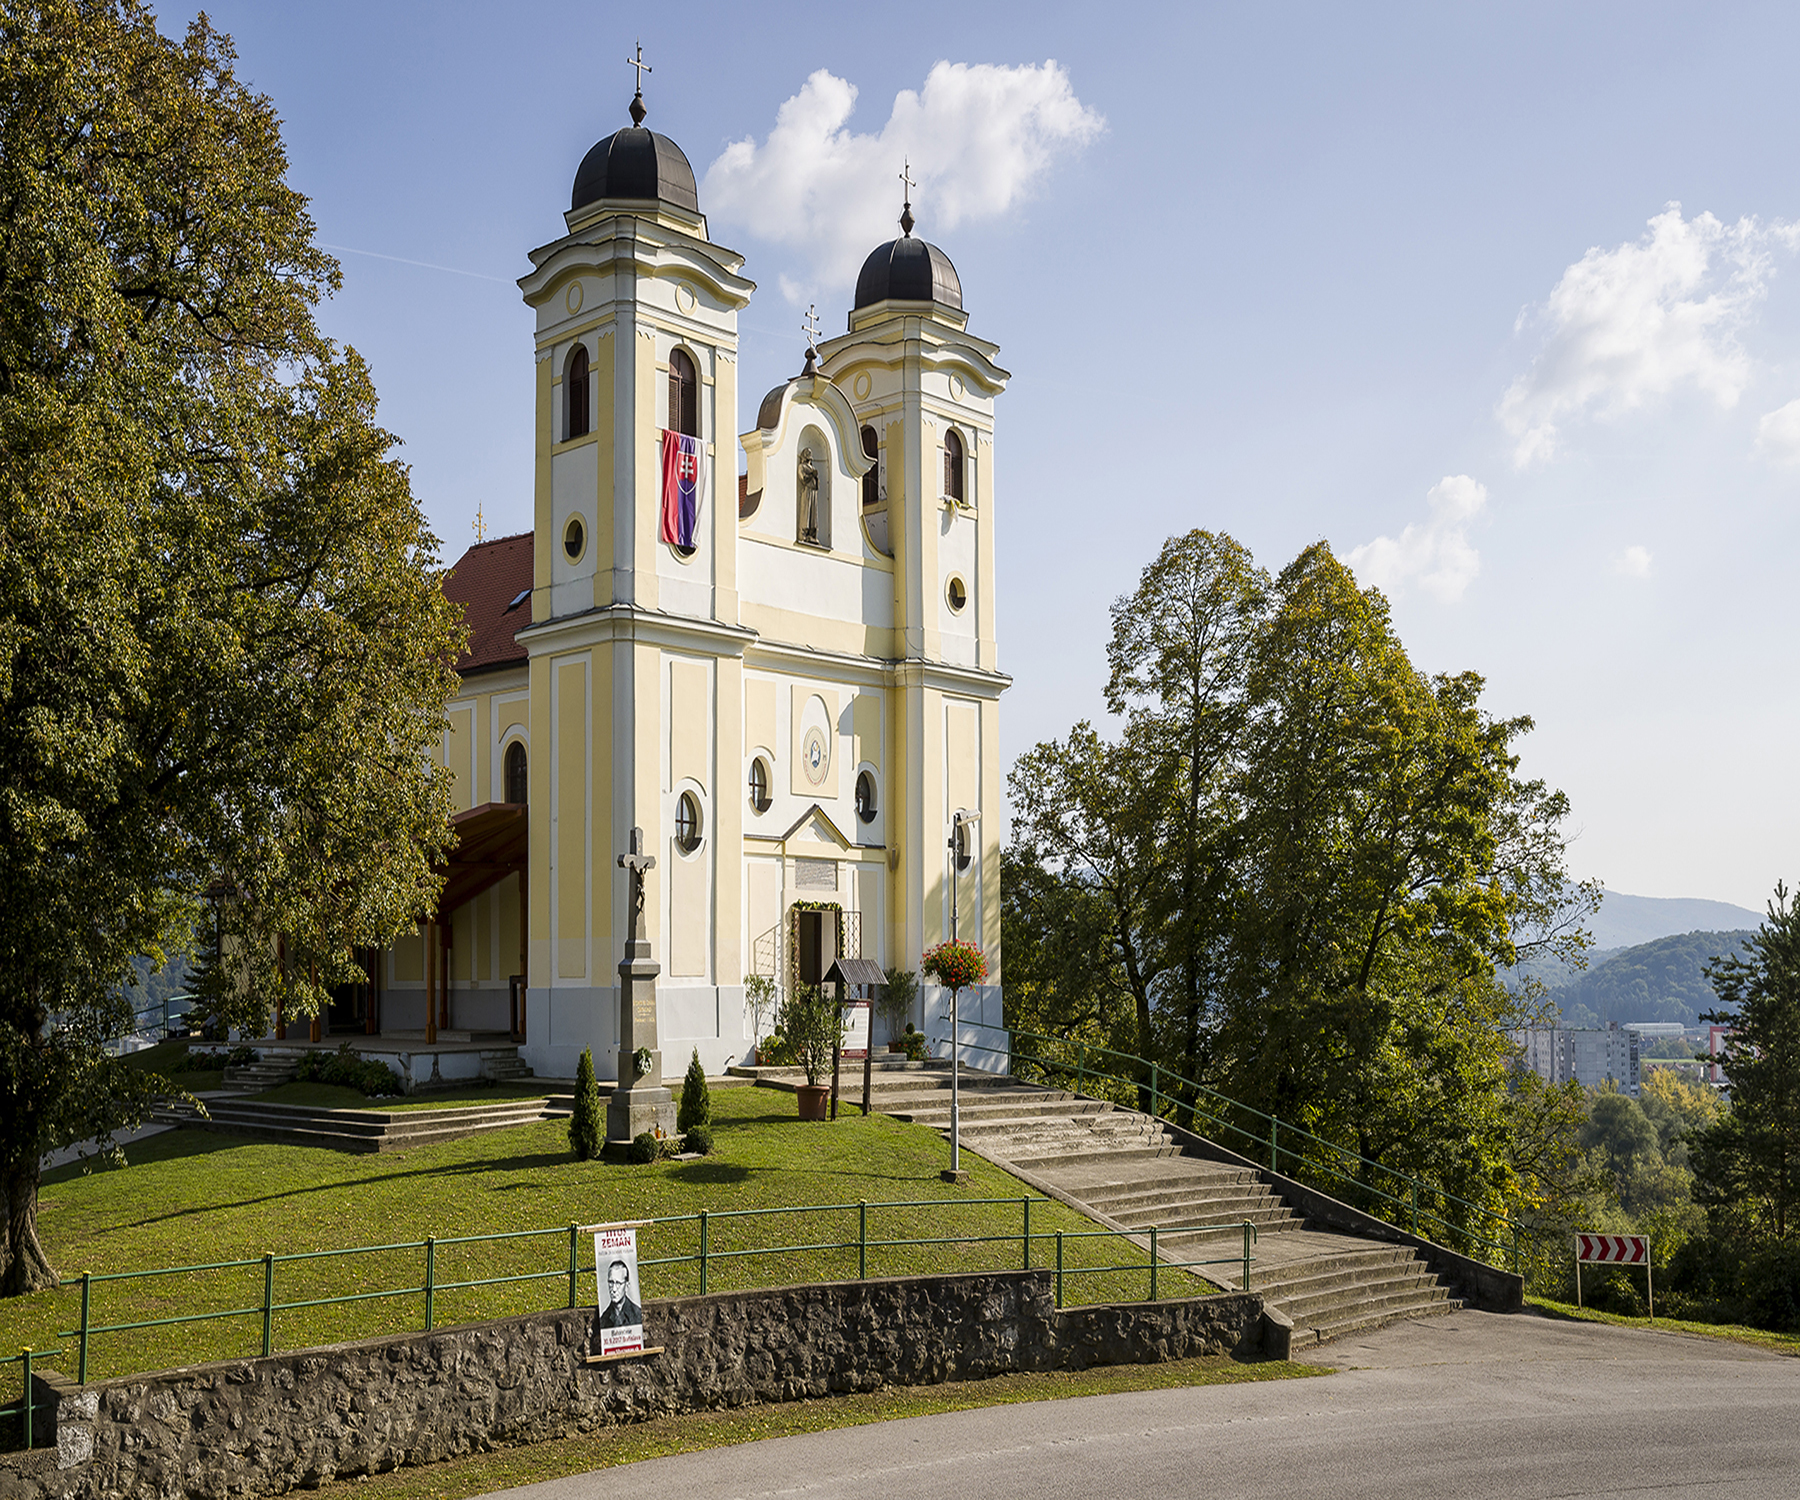 Slovensko: Tepelné čerpadlo aroTHERM vzduch/voda v pútnickom kostole v Skalke